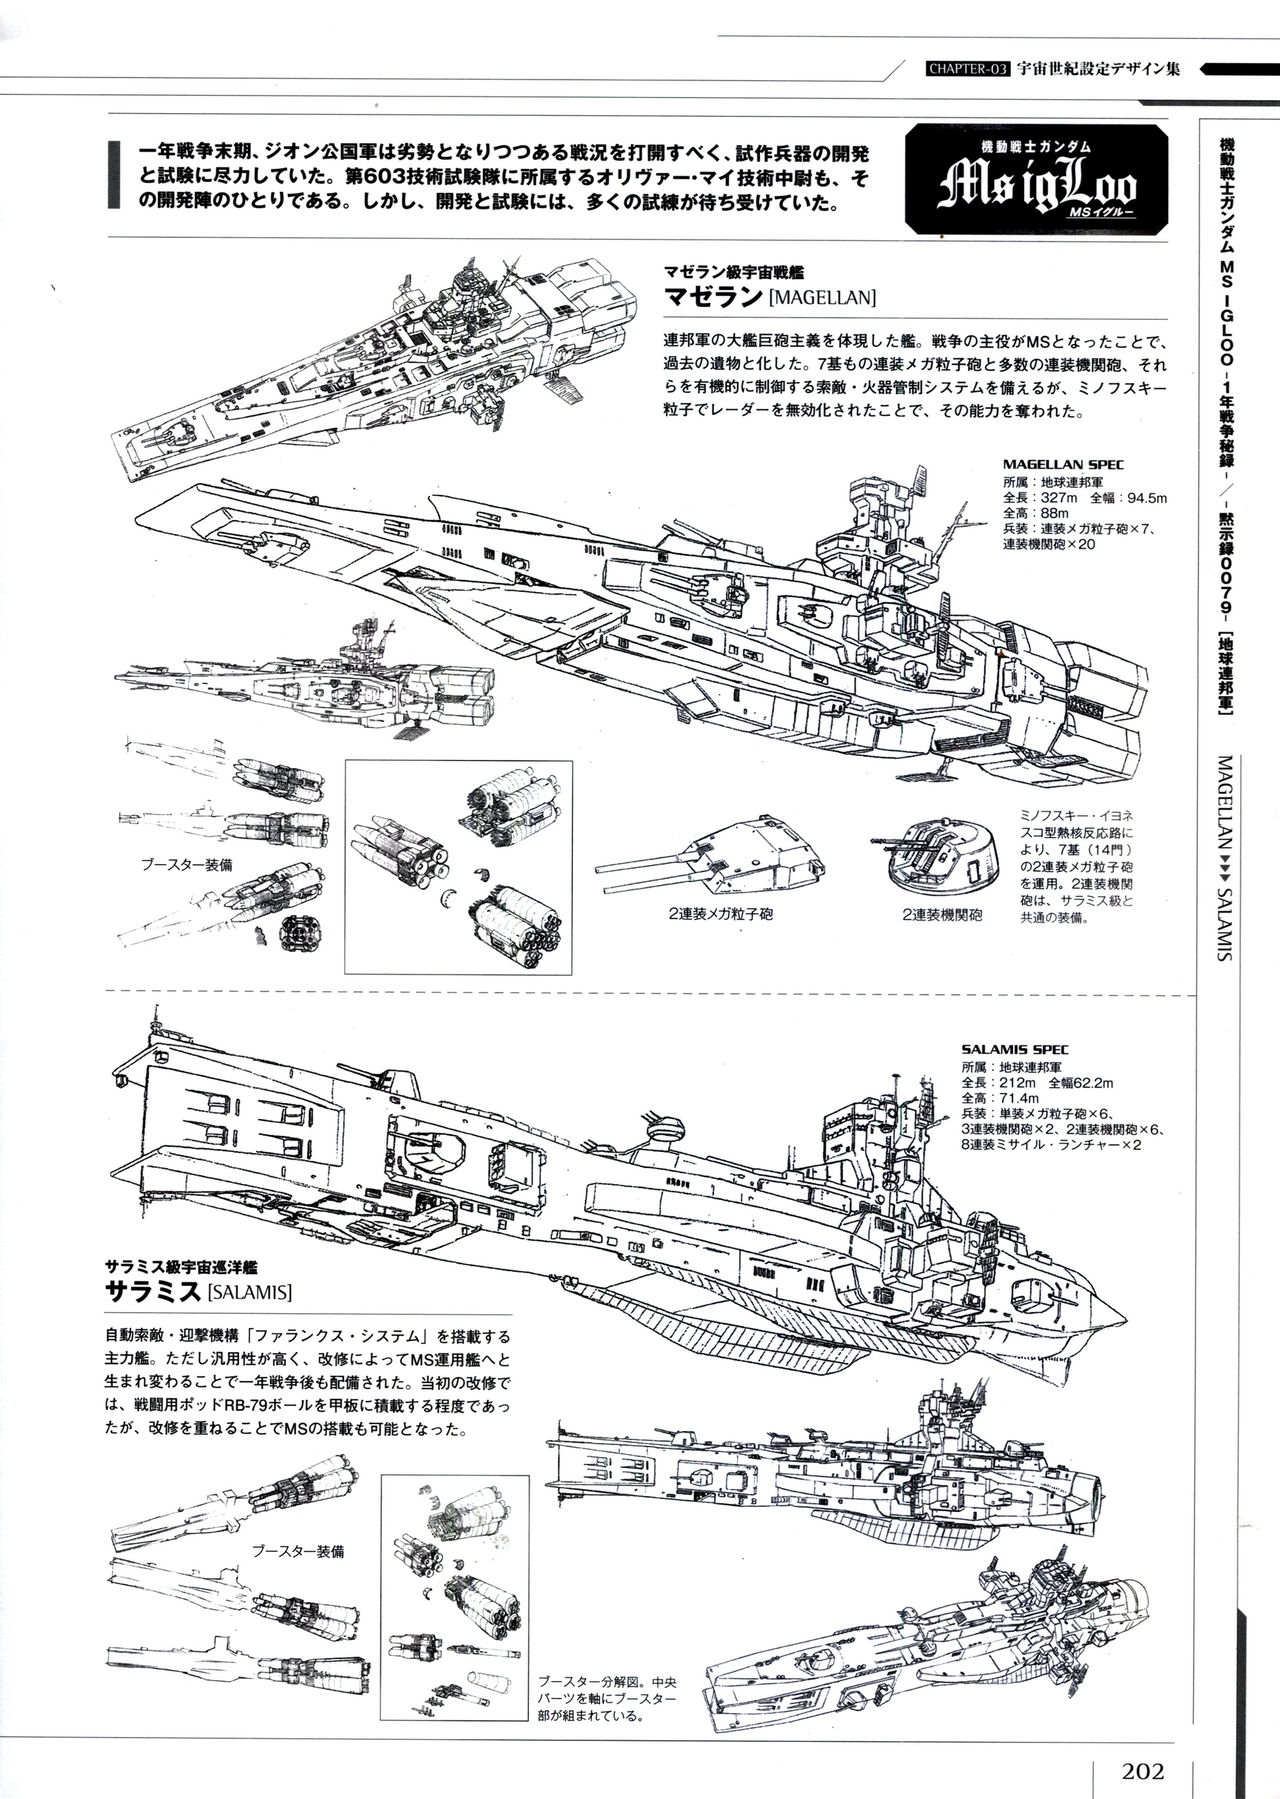 Mobile Suit Gundam - Ship & Aerospace Plane Encyclopedia - Revised Edition 207